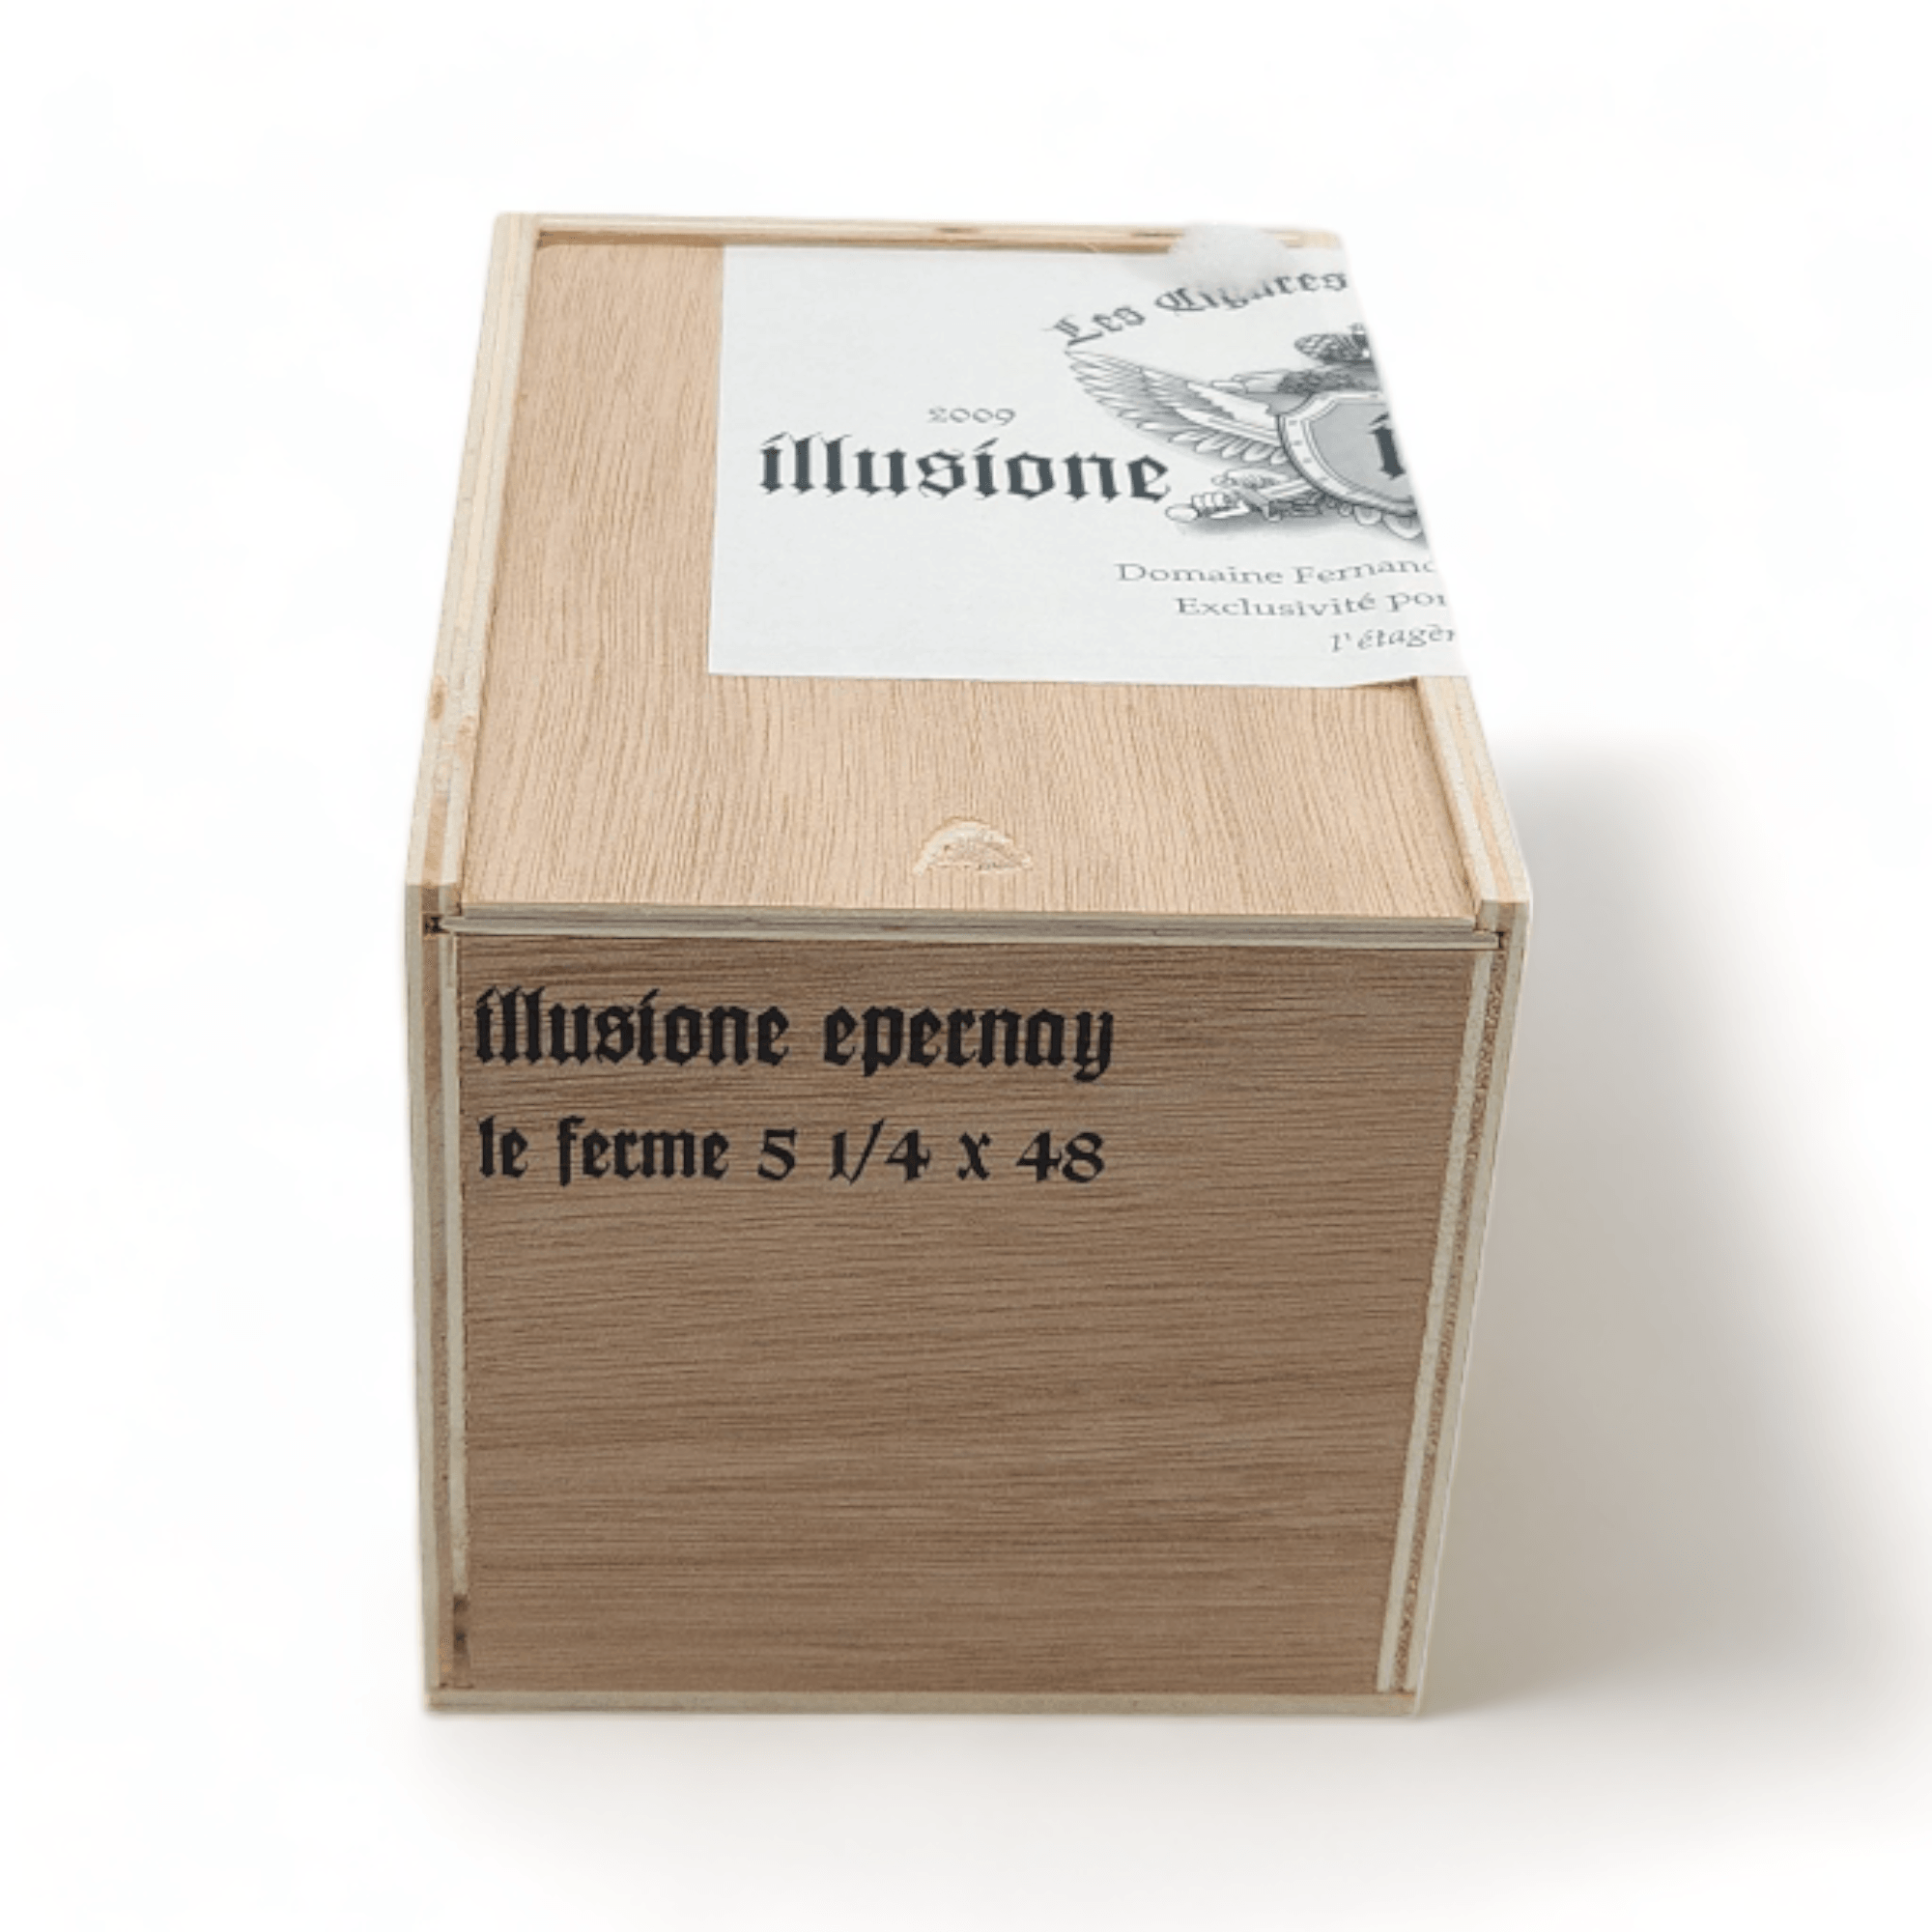 illusione Epernay Le Ferme Box 25 - hk.cohcigars